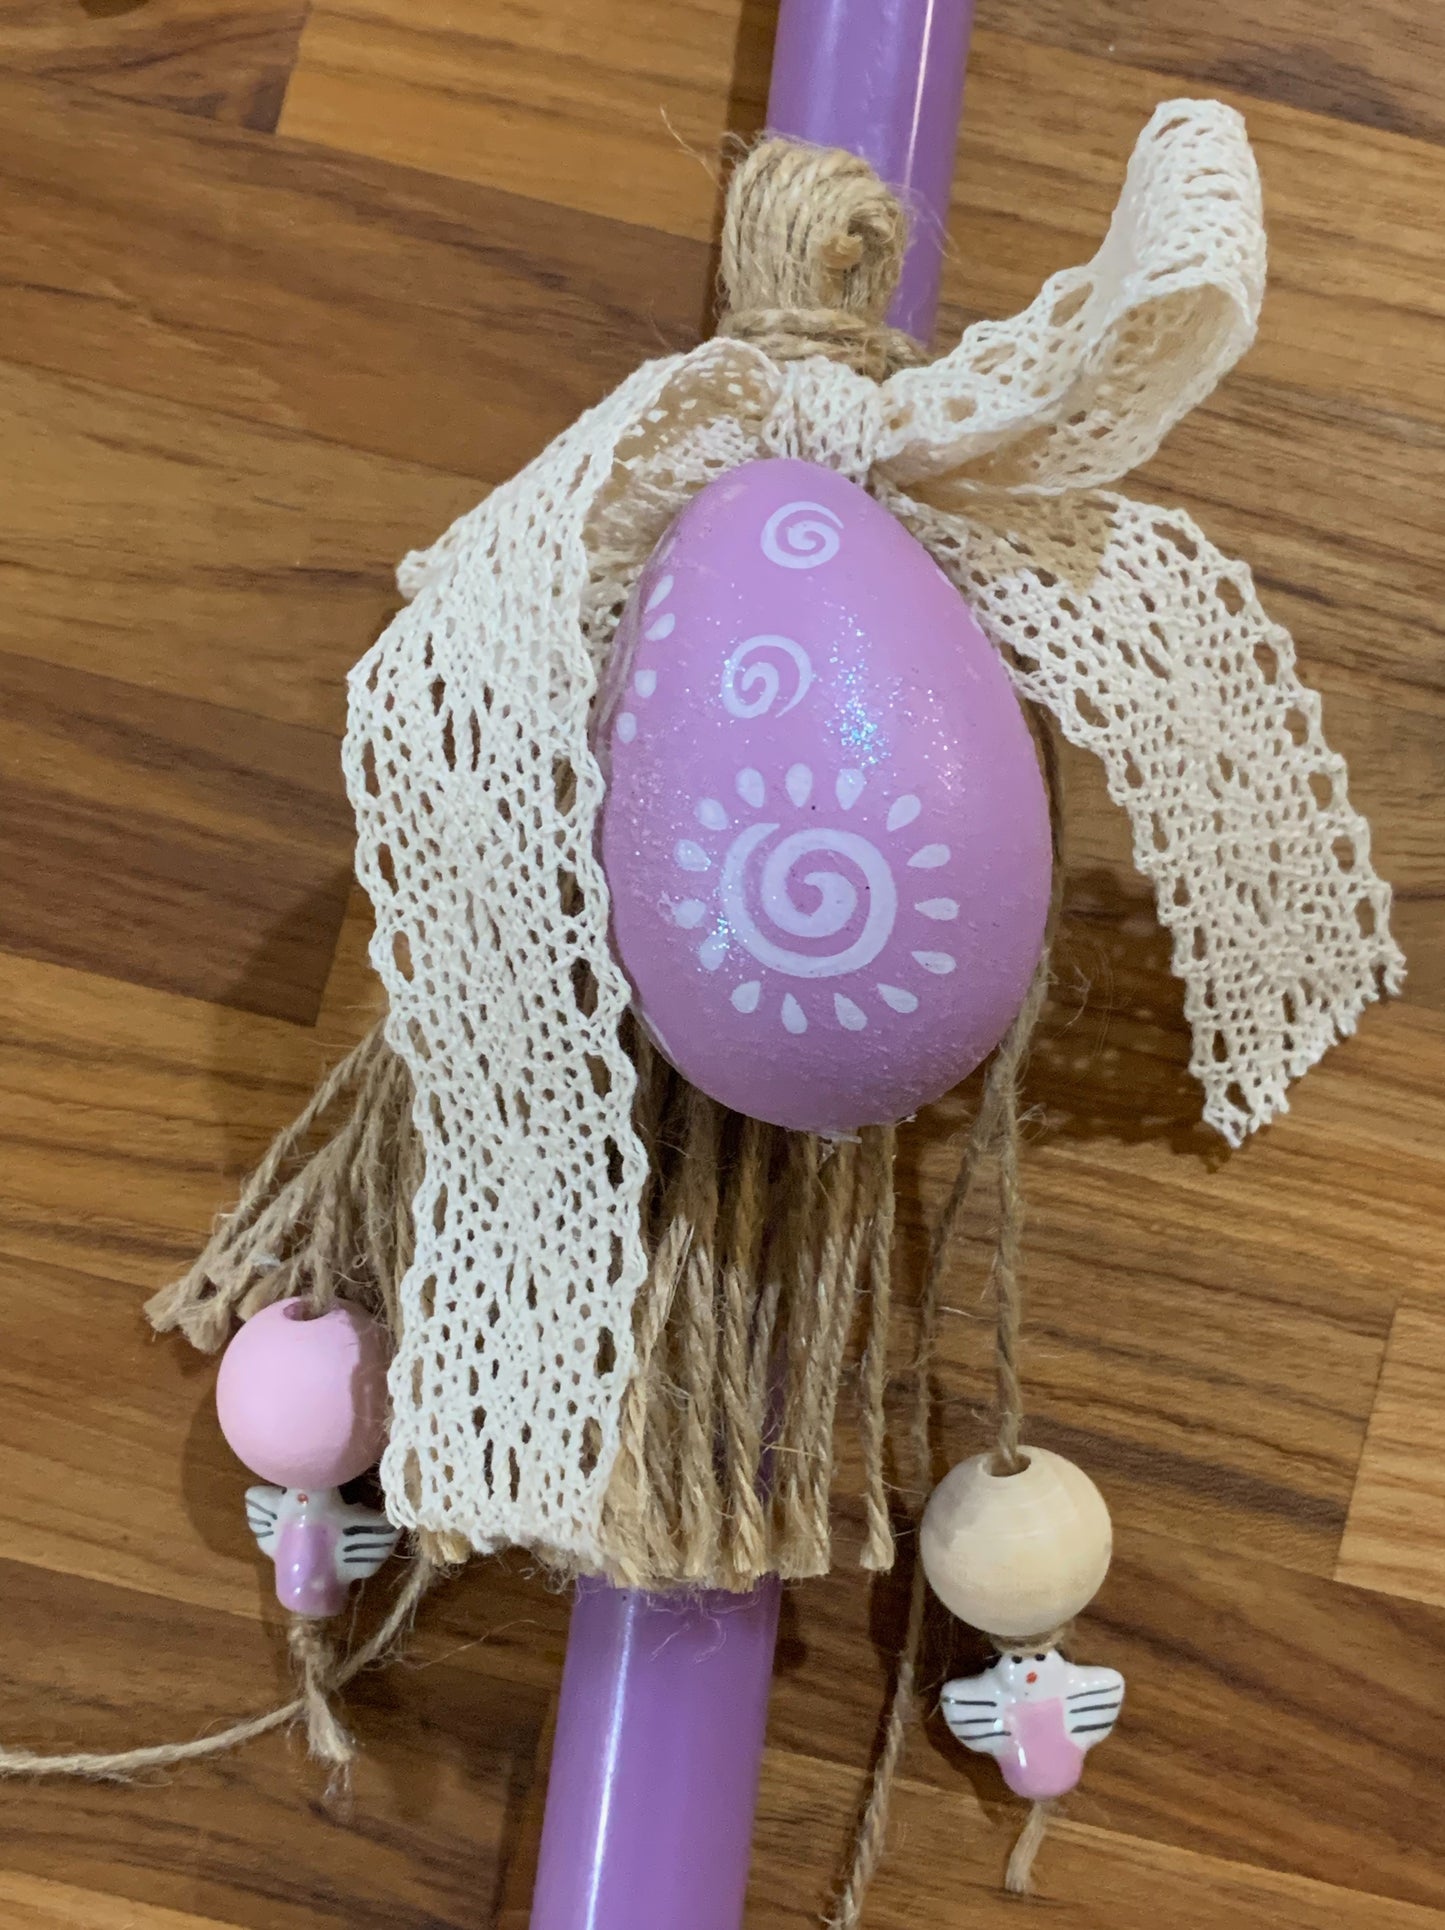 Have an eggcellent Easter...